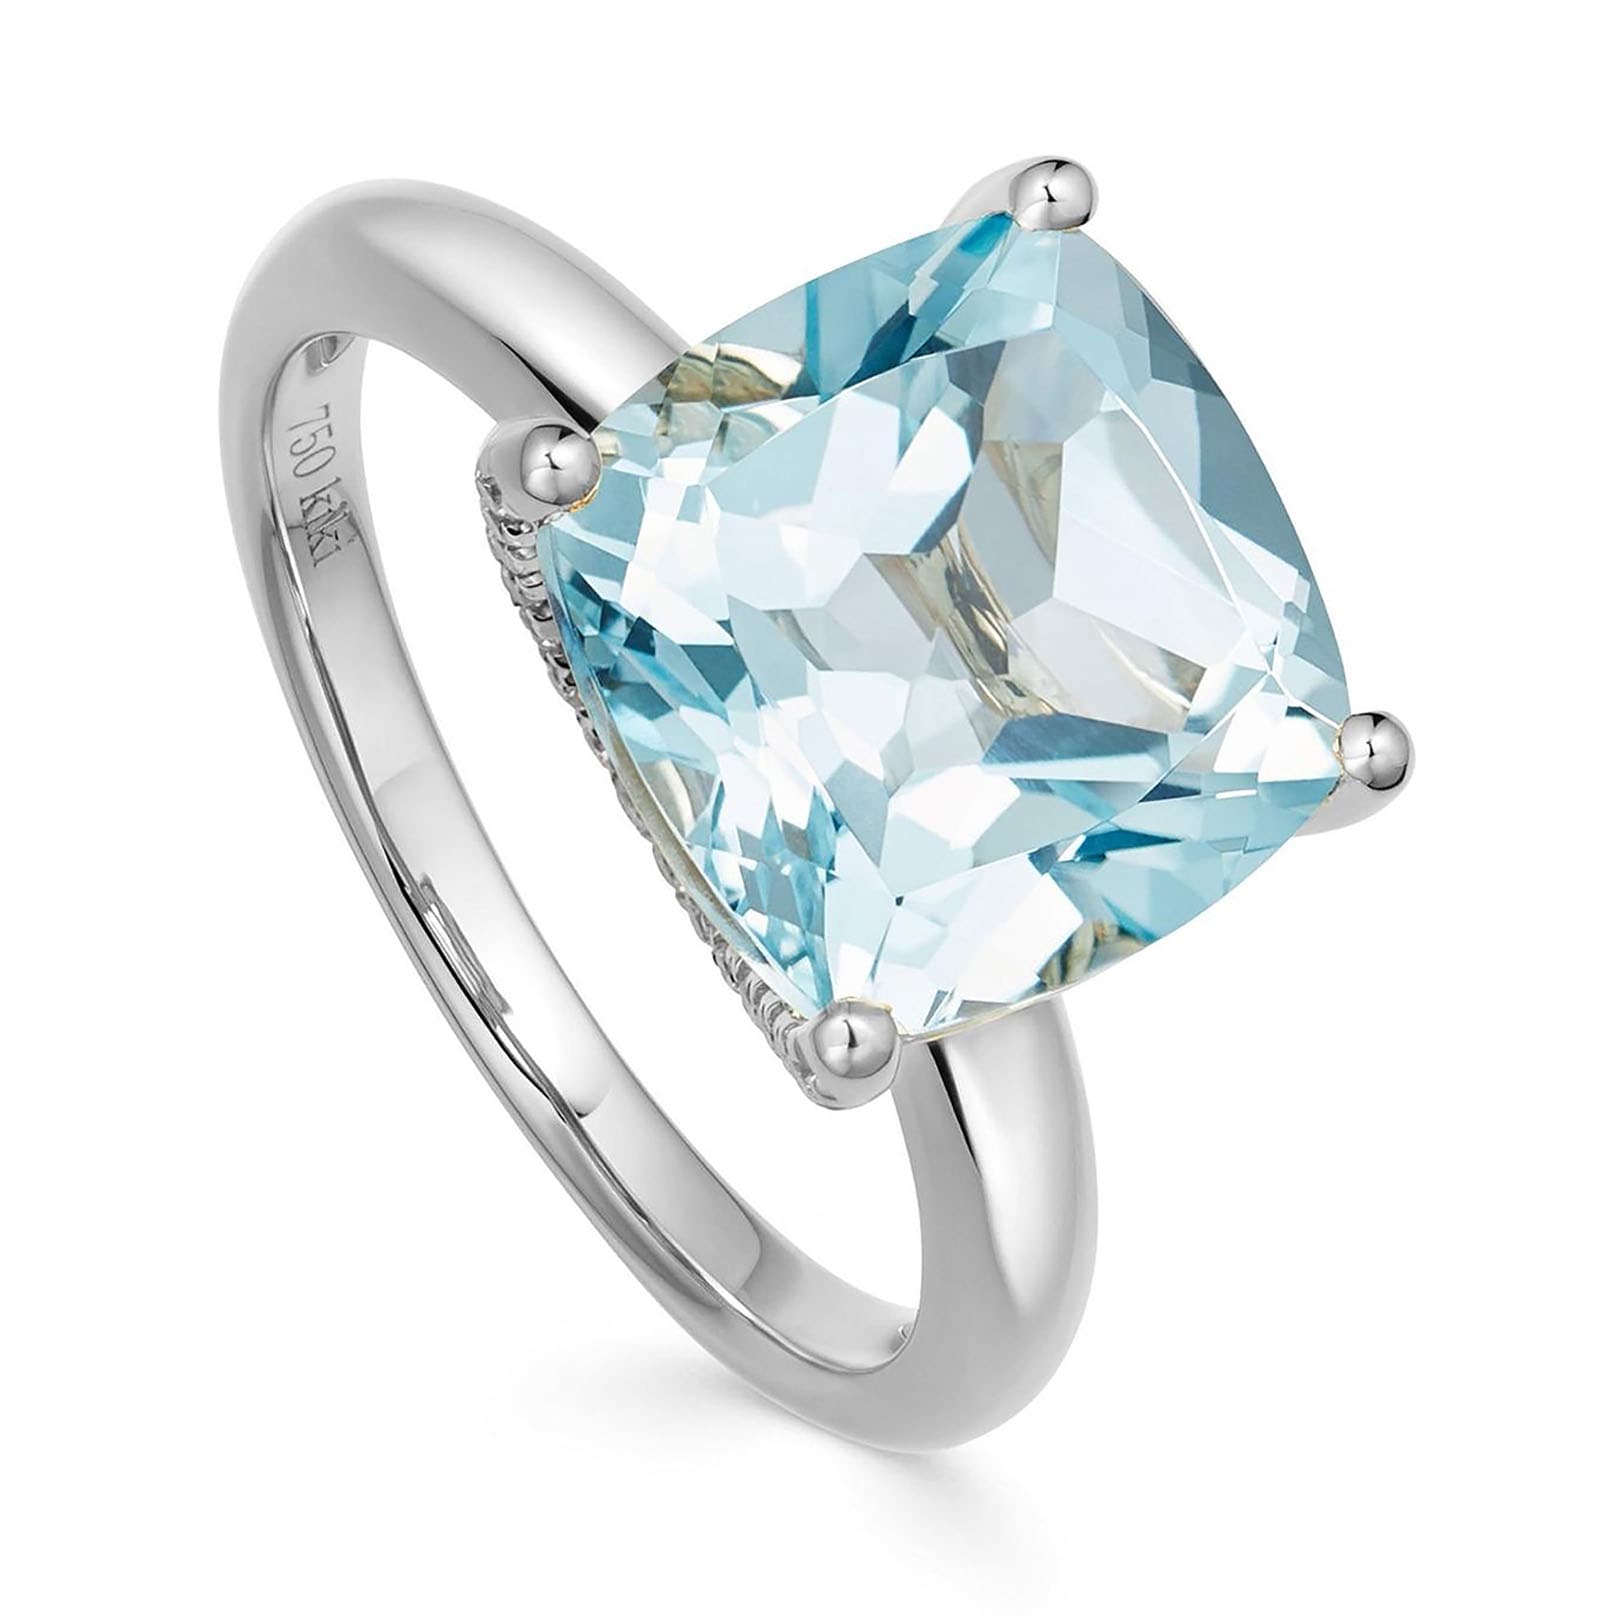 Kiki Cushion 18ct White Gold, Diamond Claw & Blue Topaz Ring - Ring Size N